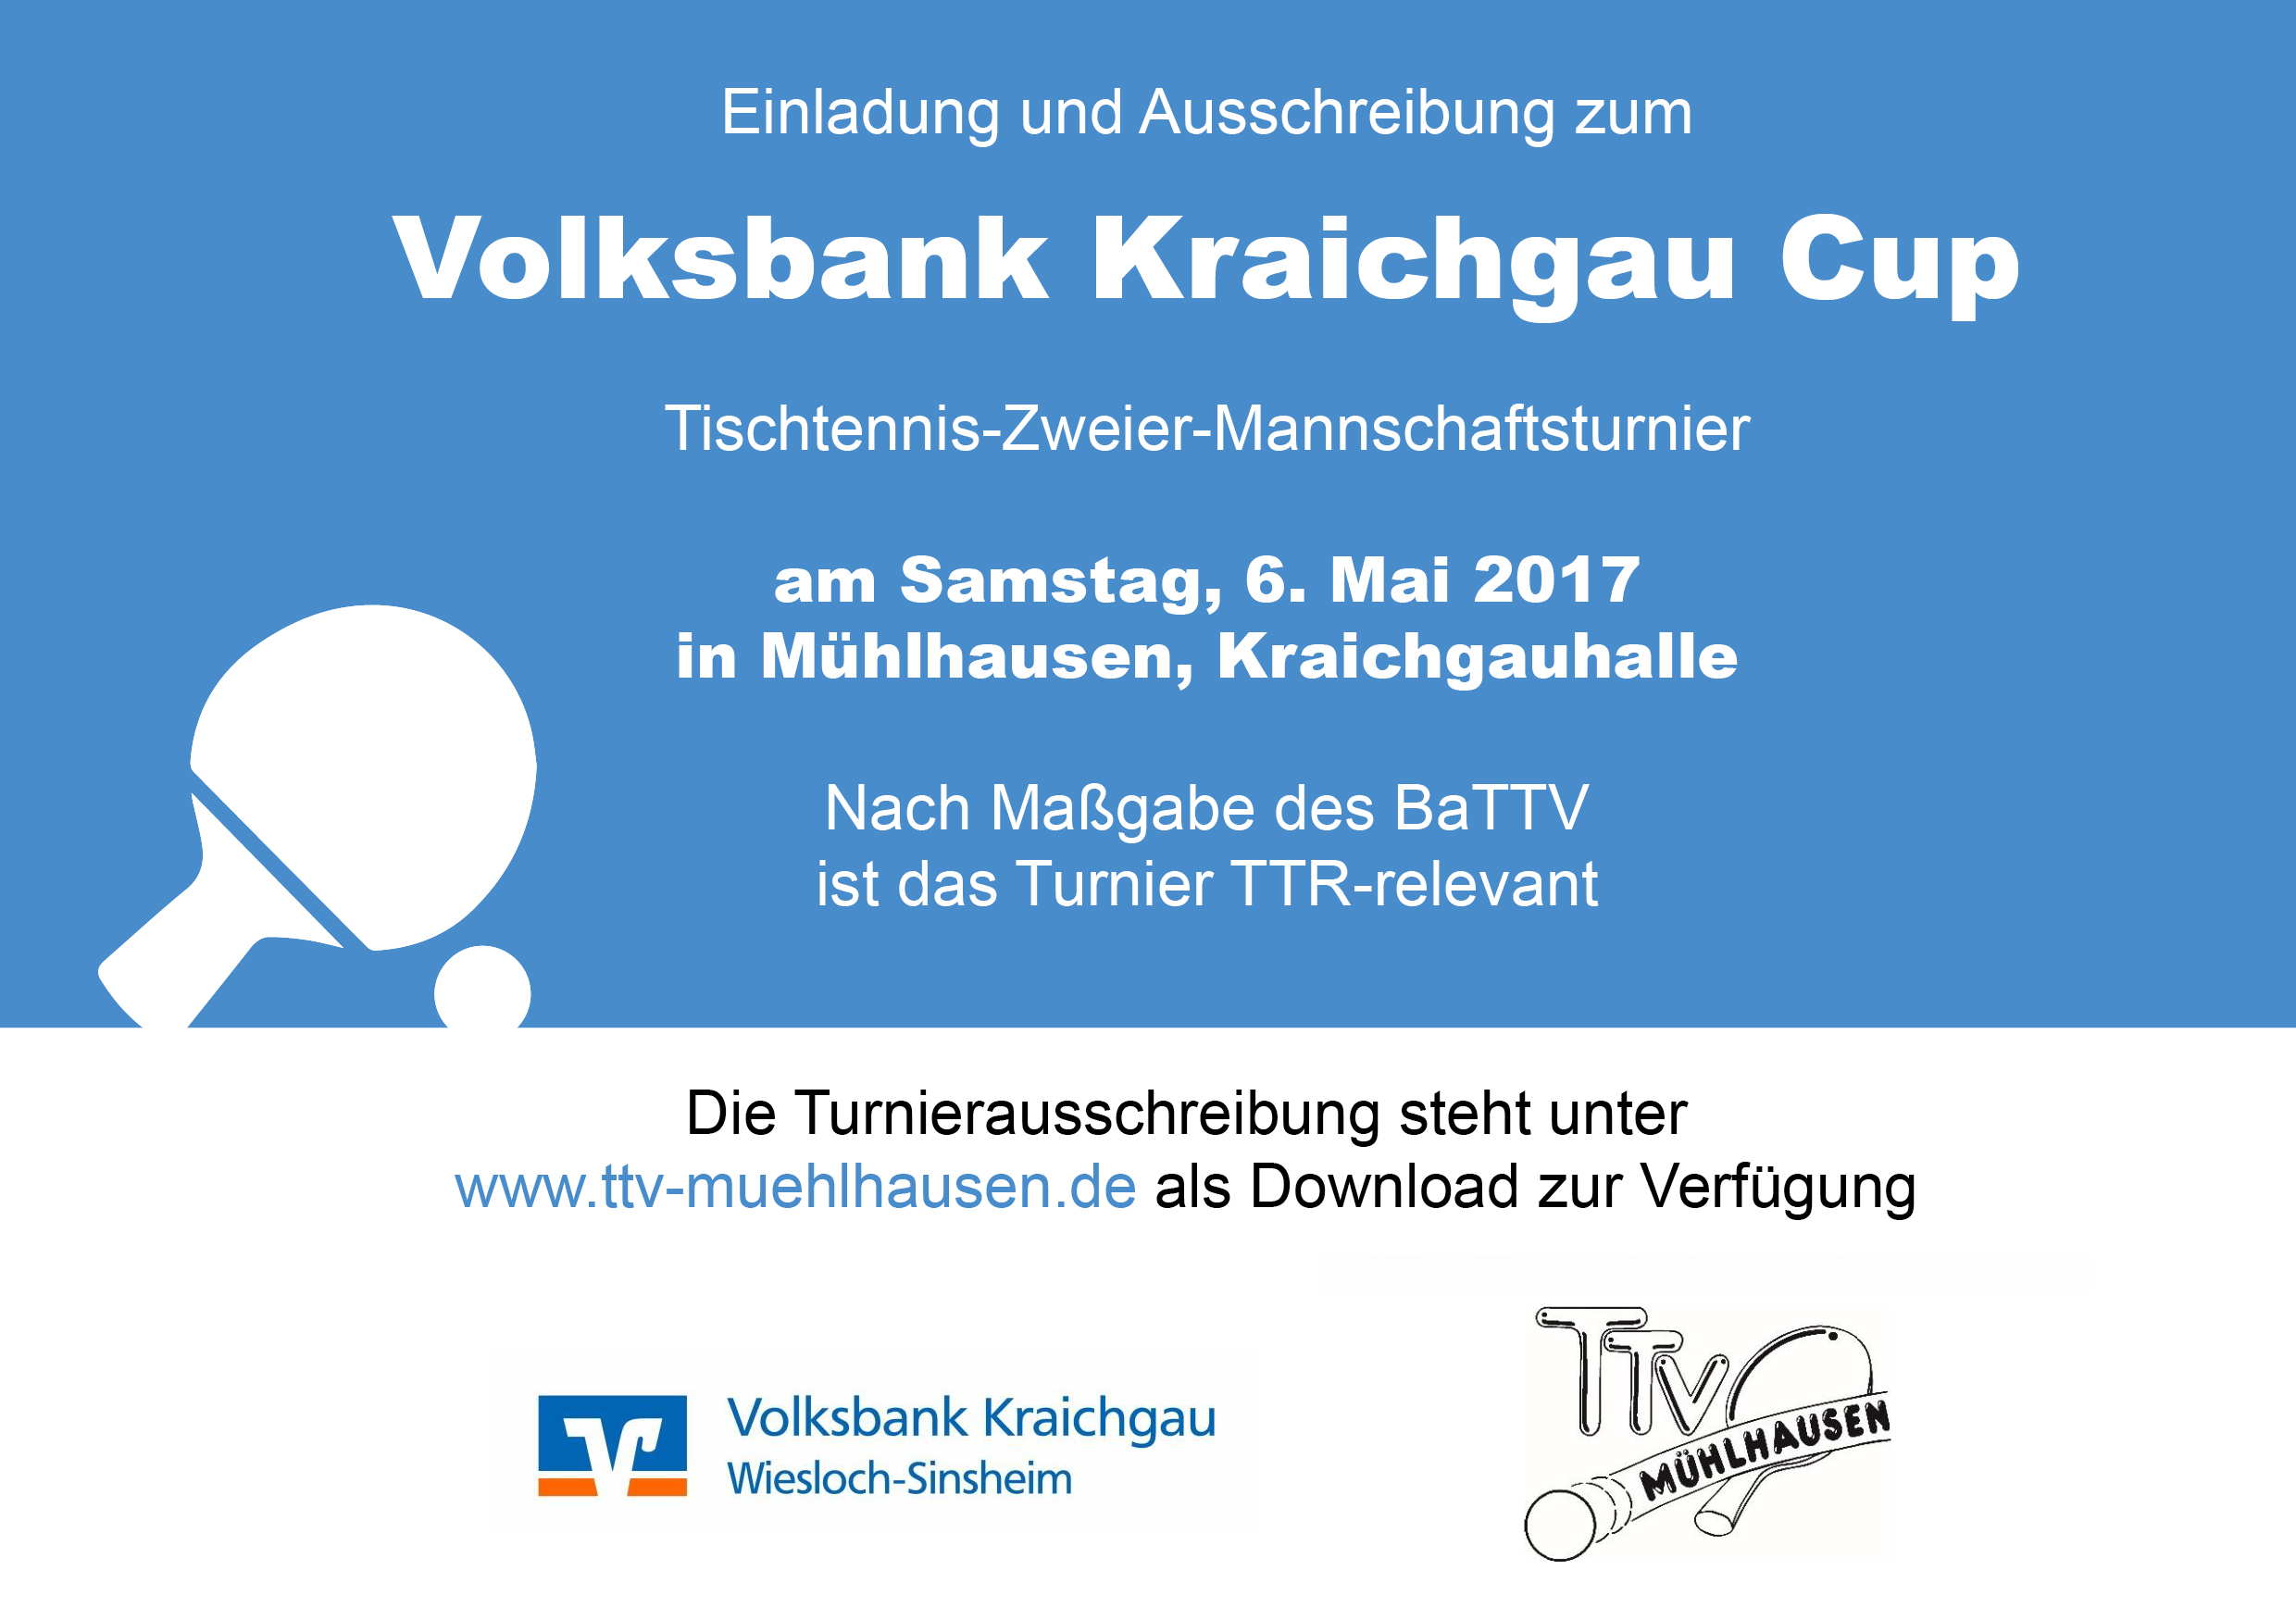 Einladung zum Volksbank Kraichgau Cup am 6. Mai 2017